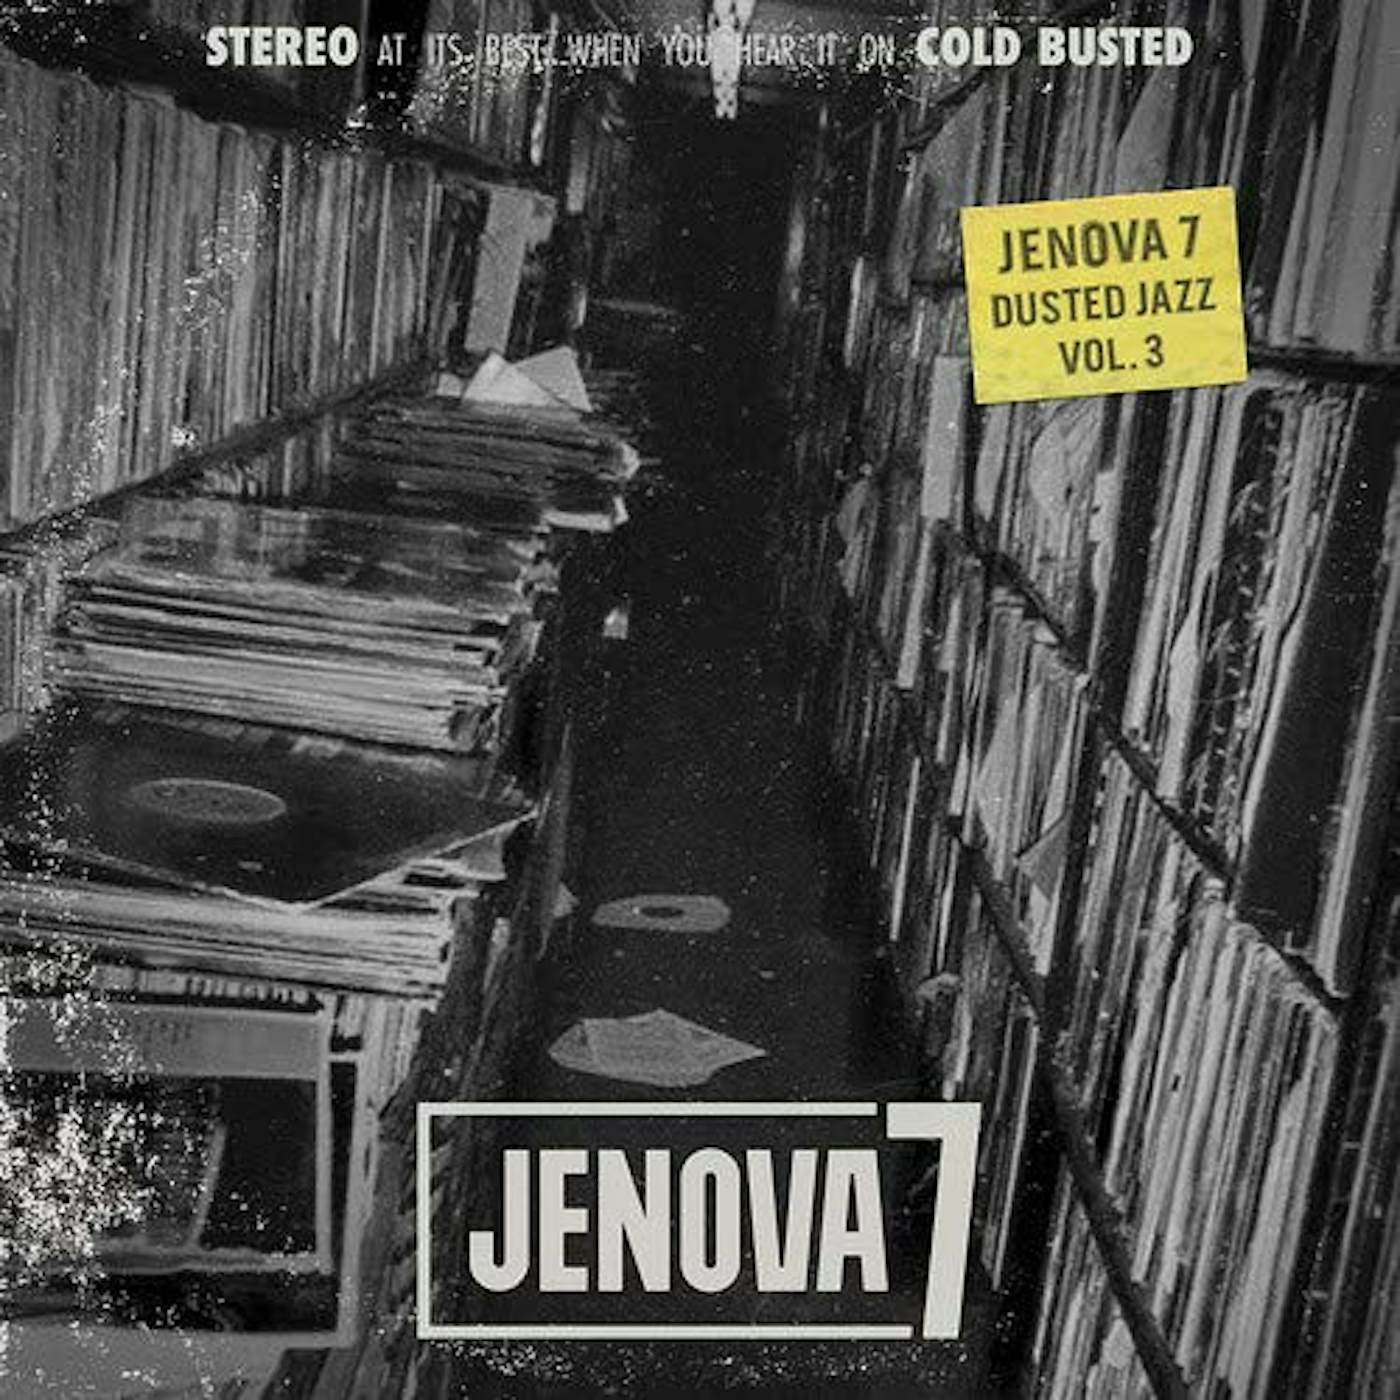 Jenova 7 DUSTED JAZZ VOL. 3 Vinyl Record